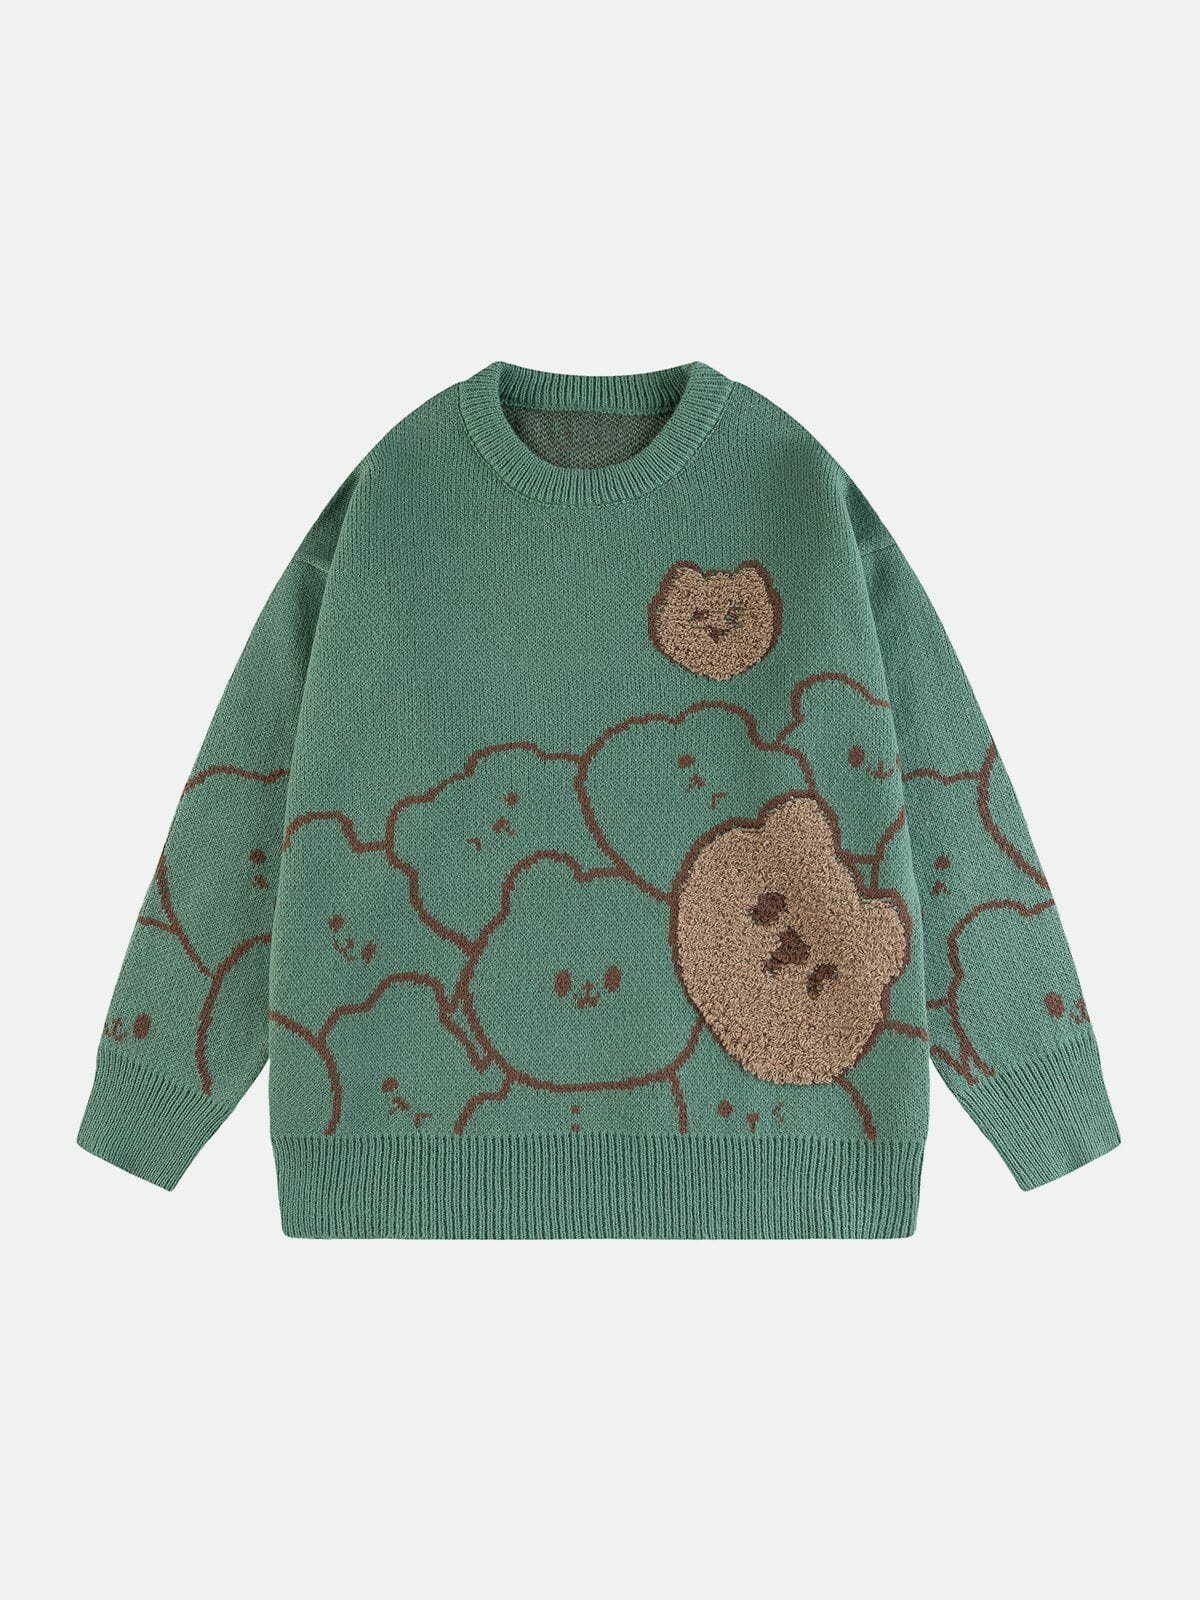 retro jacquard bear sweater quirky vintage charm 6860